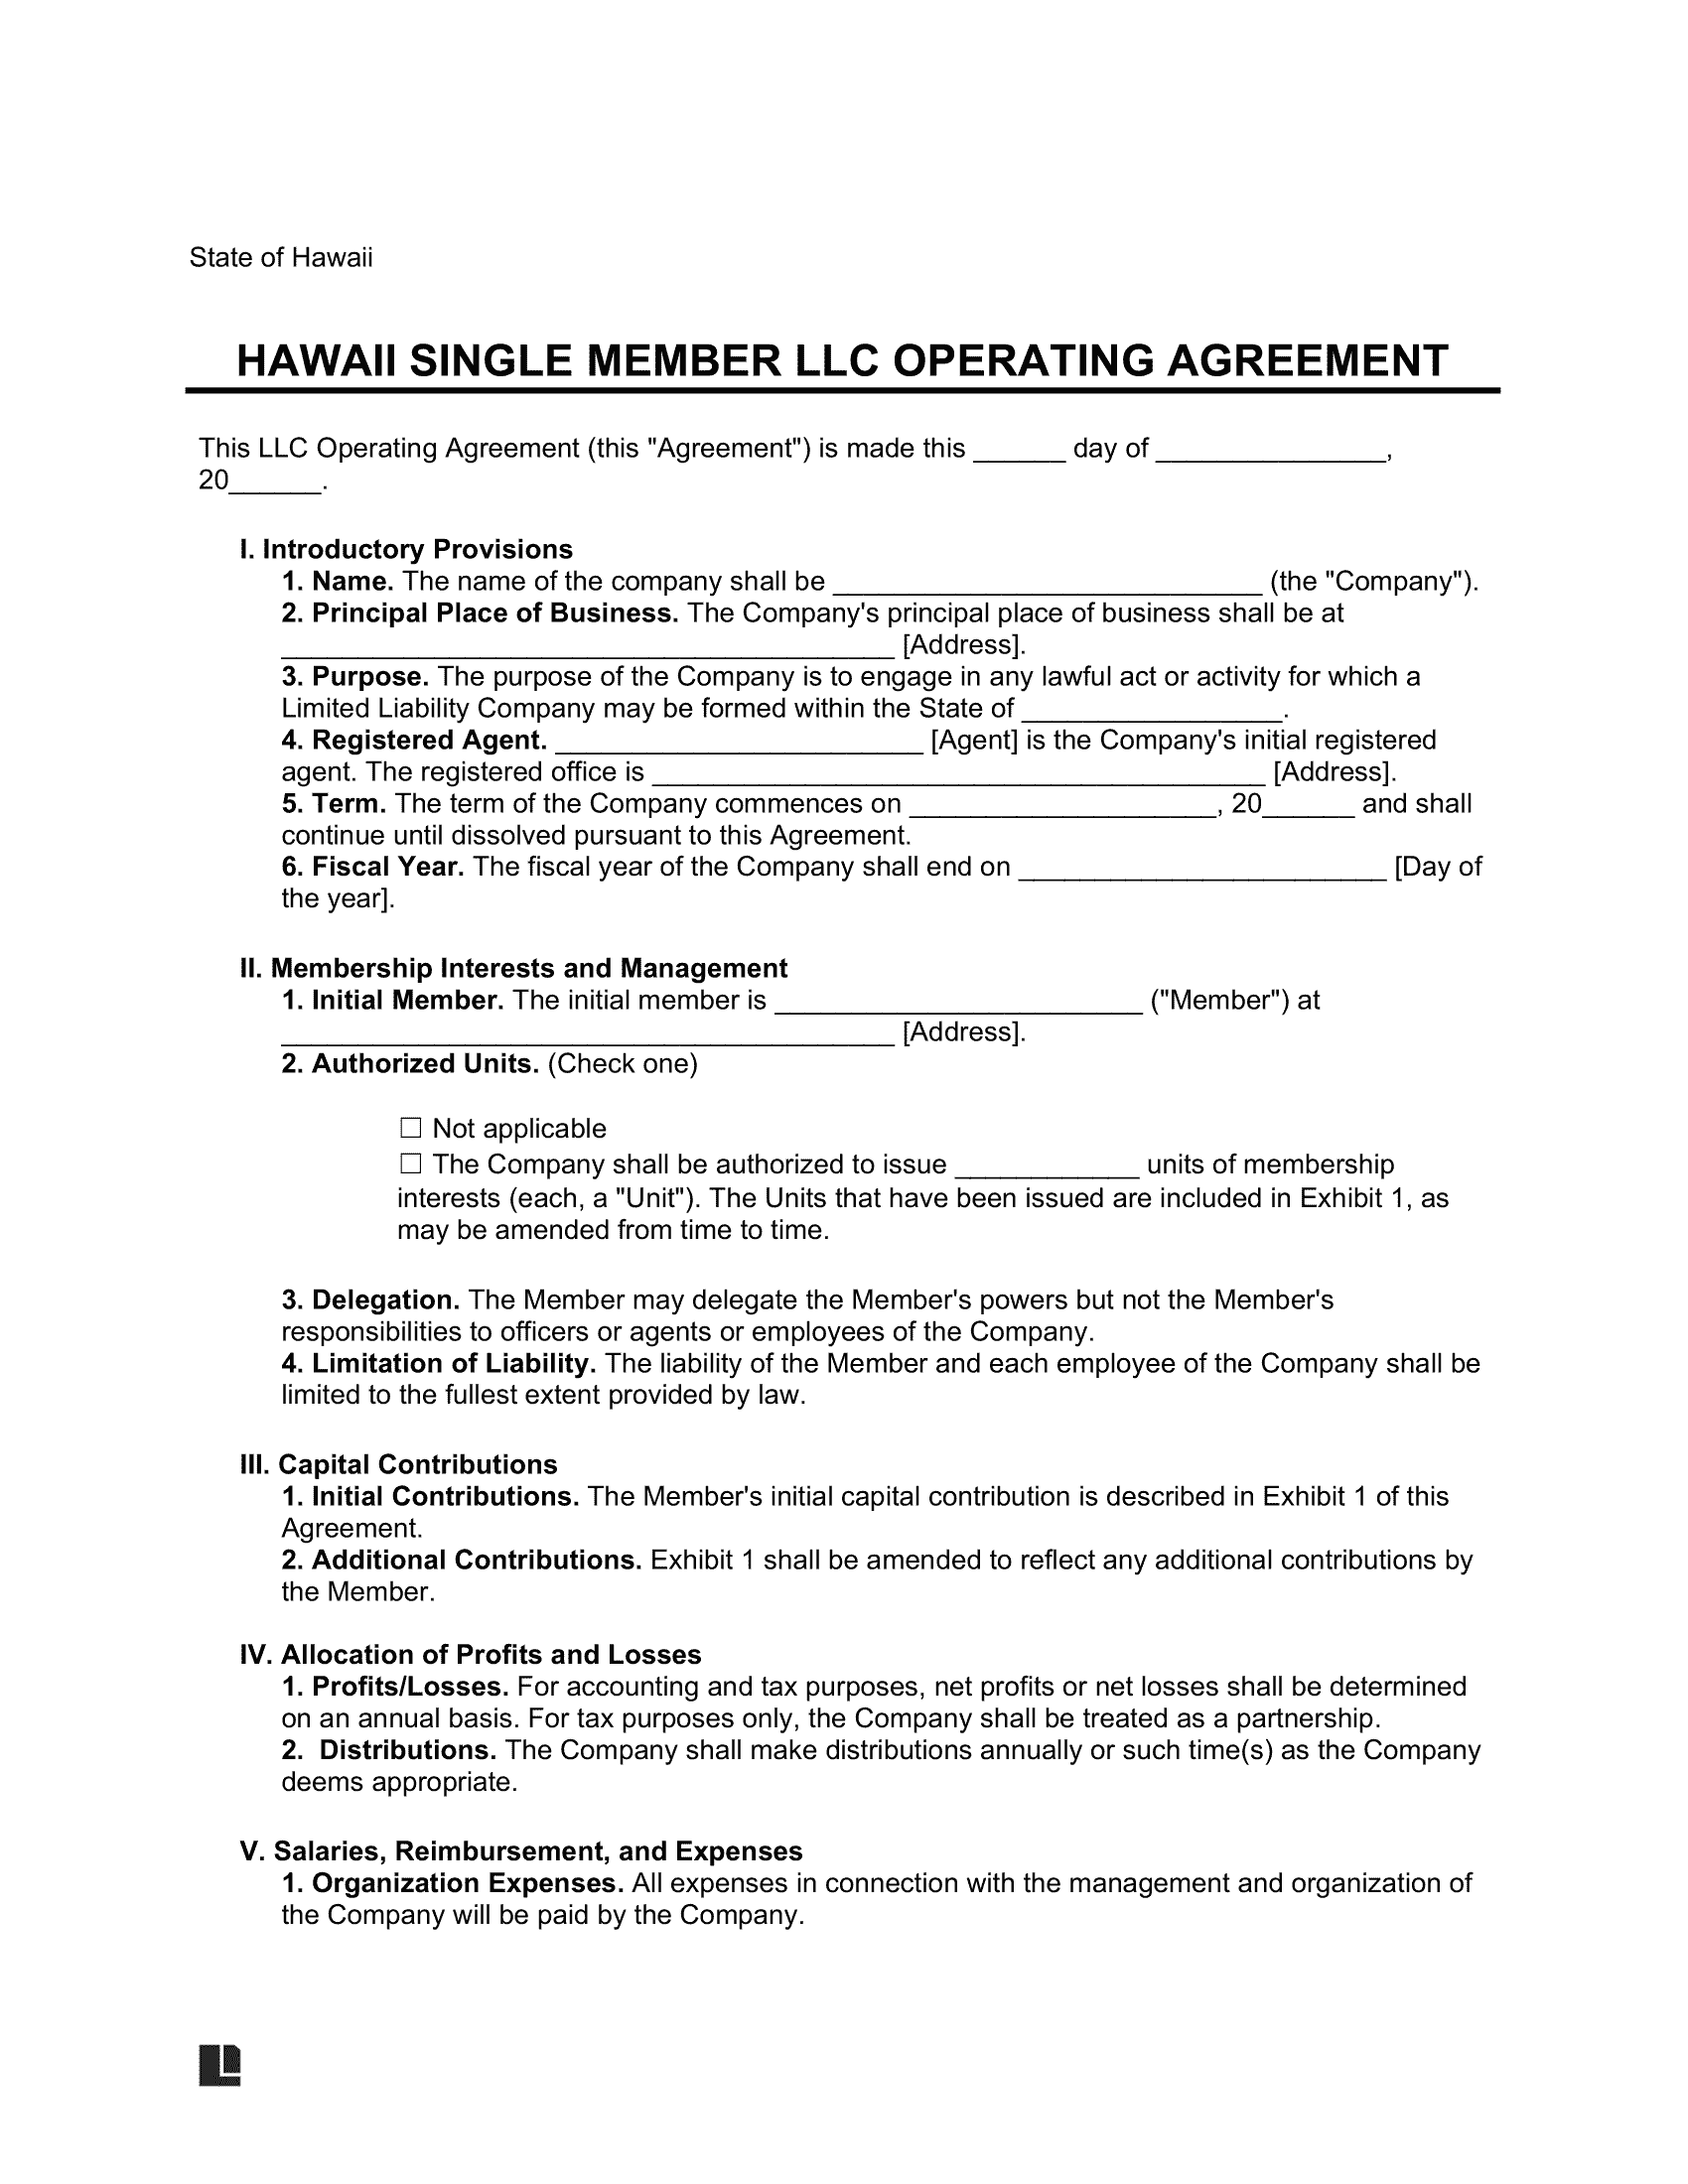 Hawaii Single Member LLC Operating Agreement Form